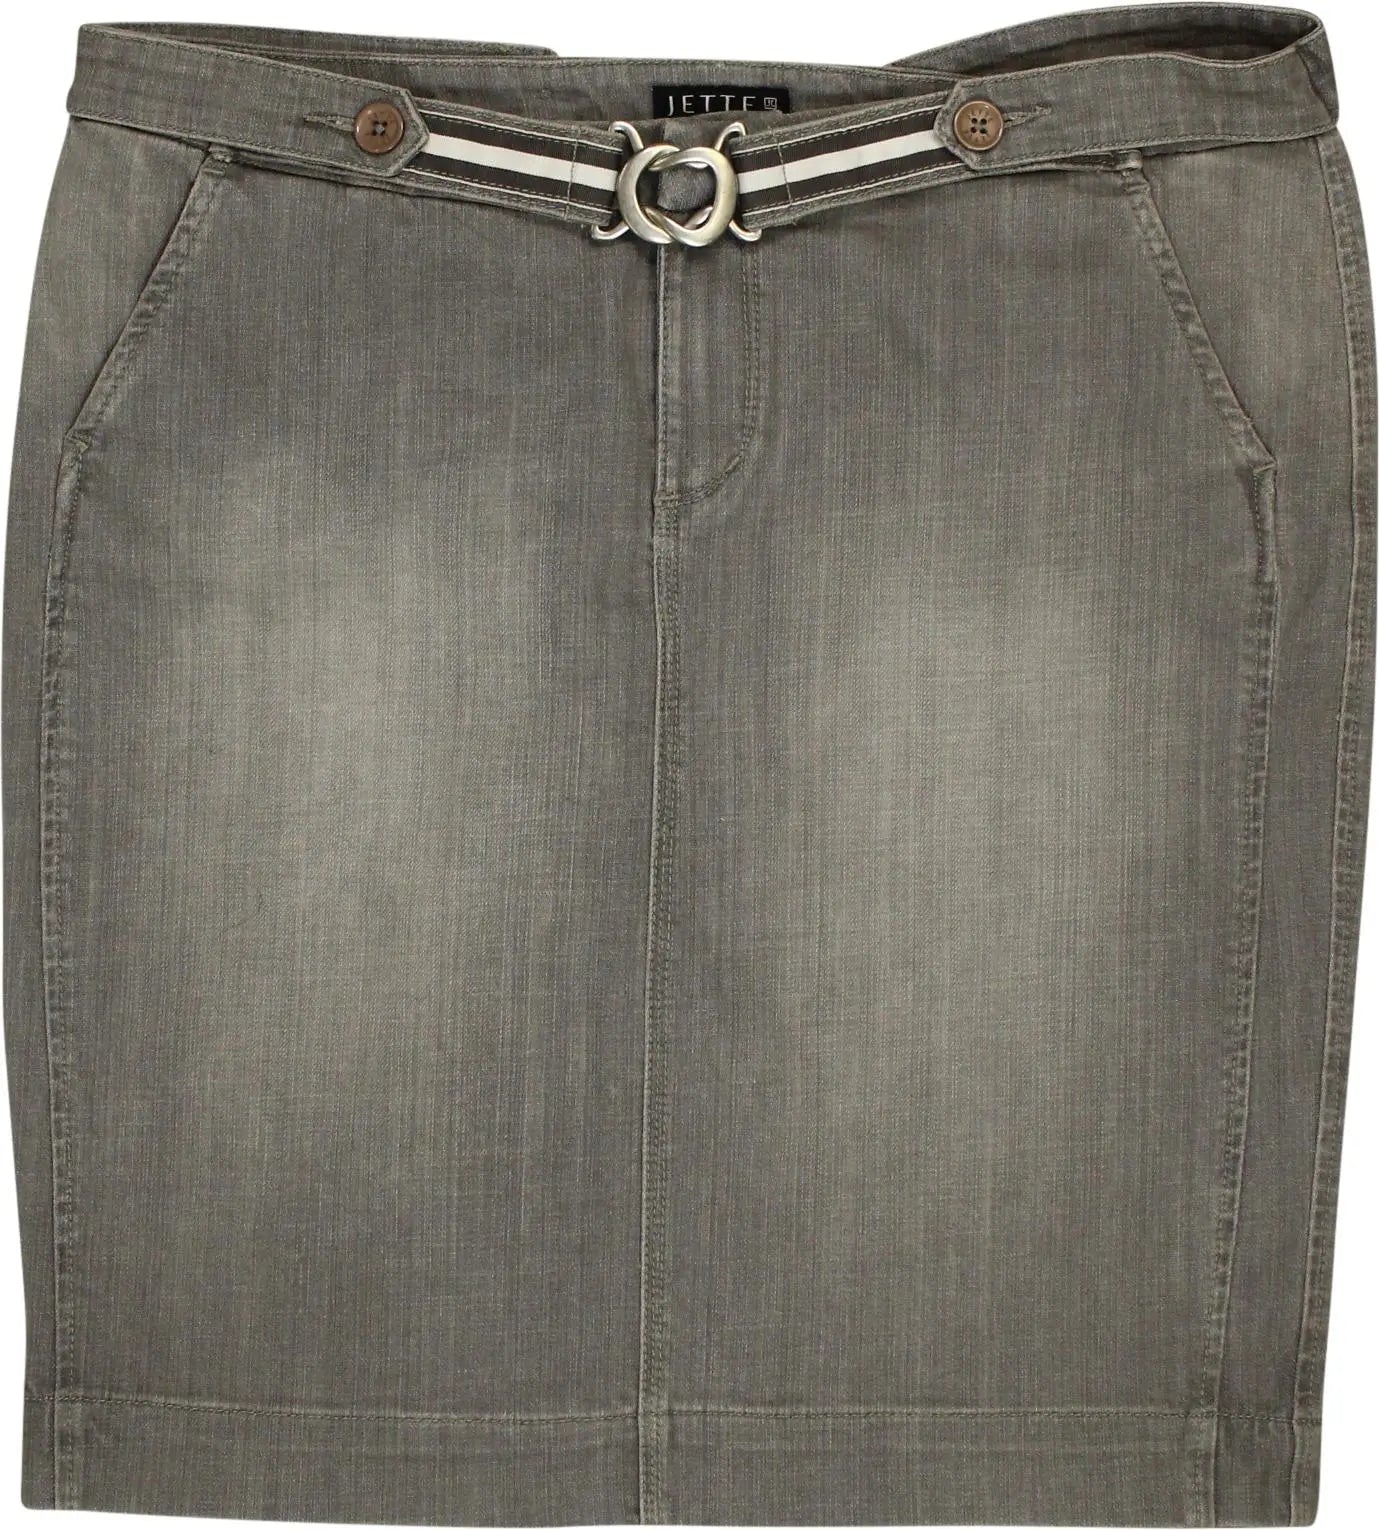 Jette - Denim Skirt- ThriftTale.com - Vintage and second handclothing